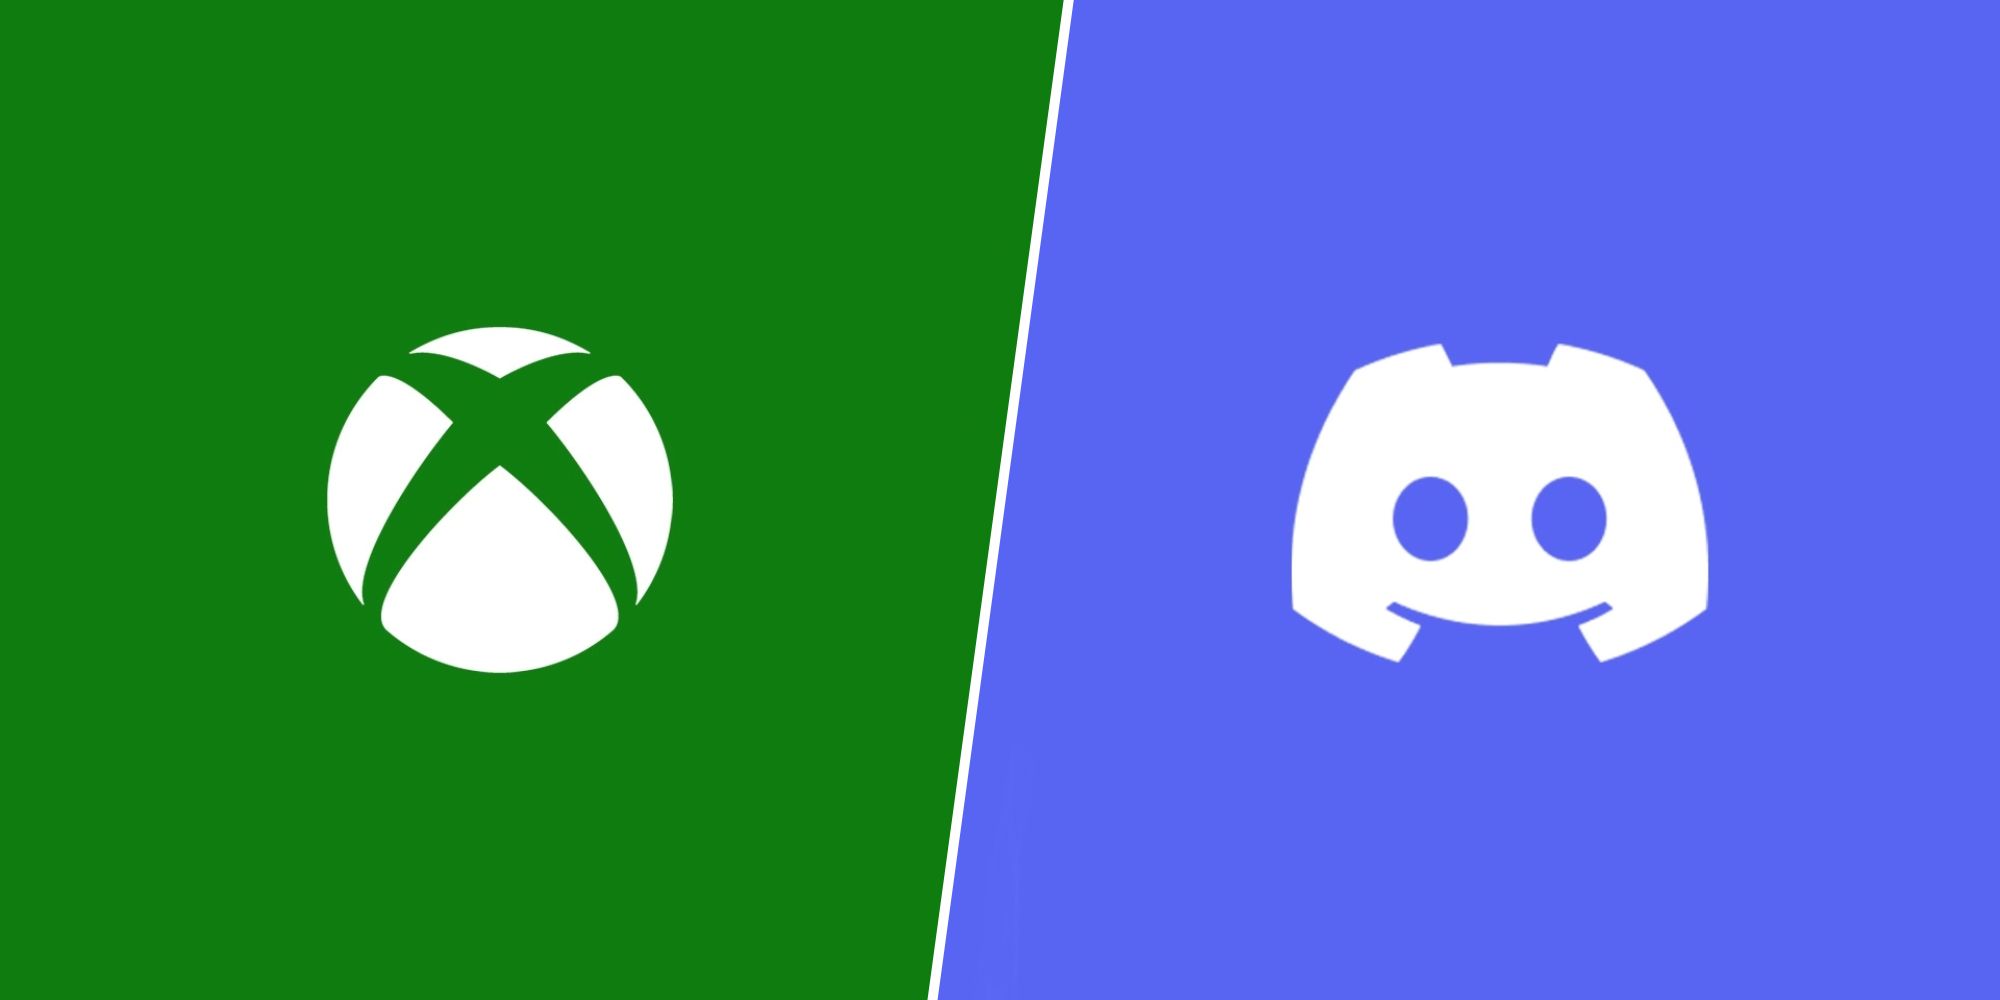 Xbox and Discord logos